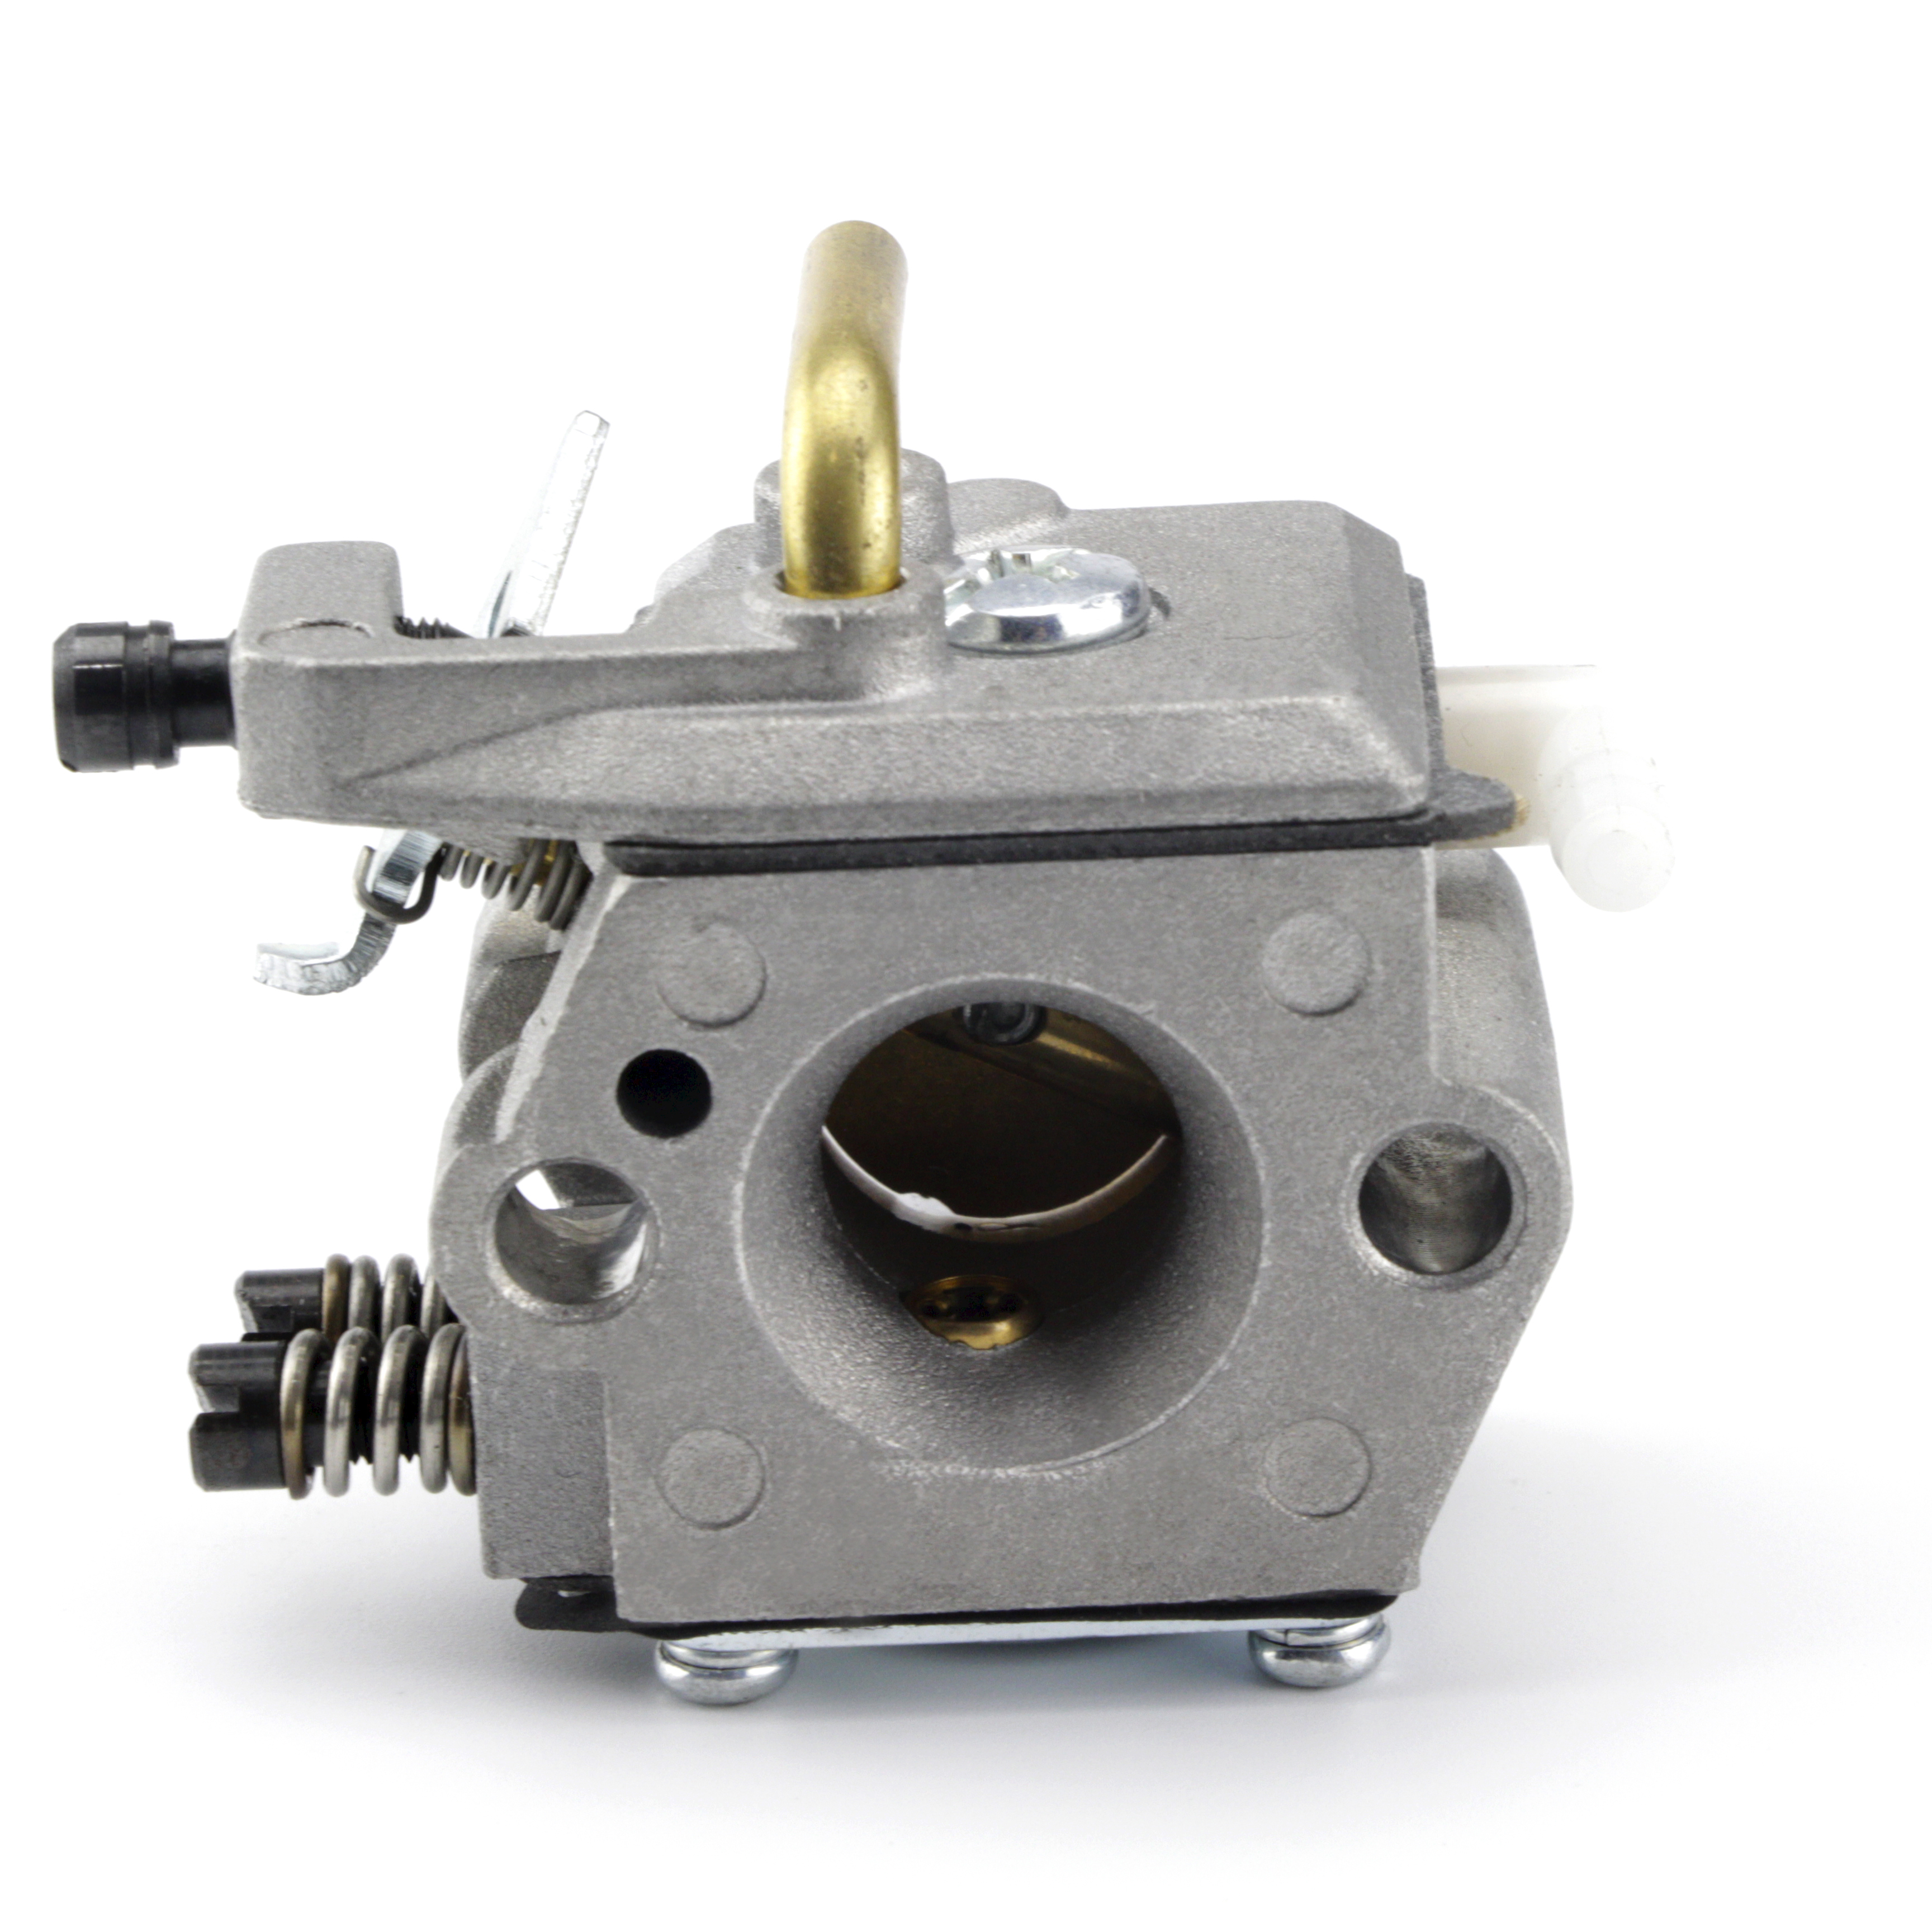 WT-403B Tracking # Carburetor For Stihl 024 026 MS240 MS260 Rep 1121 120 0610 